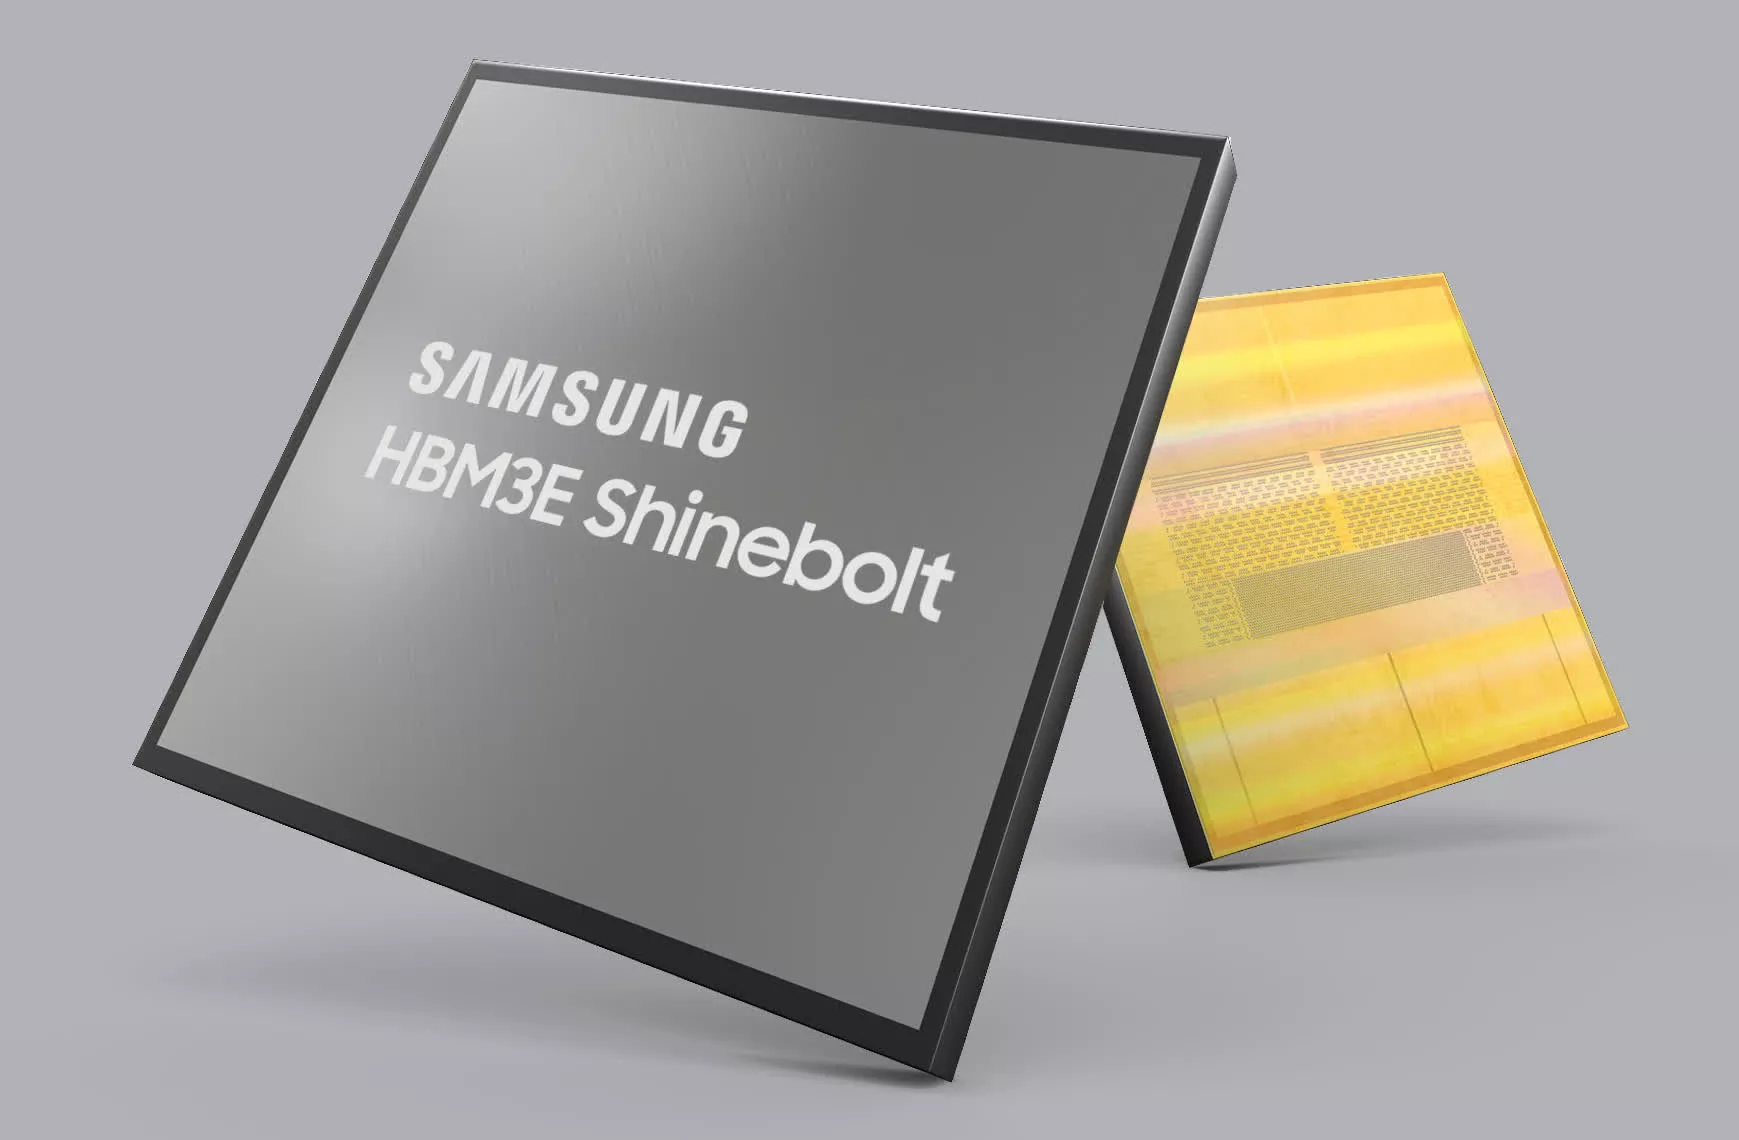 Samsung Hbm3e Shinebolt